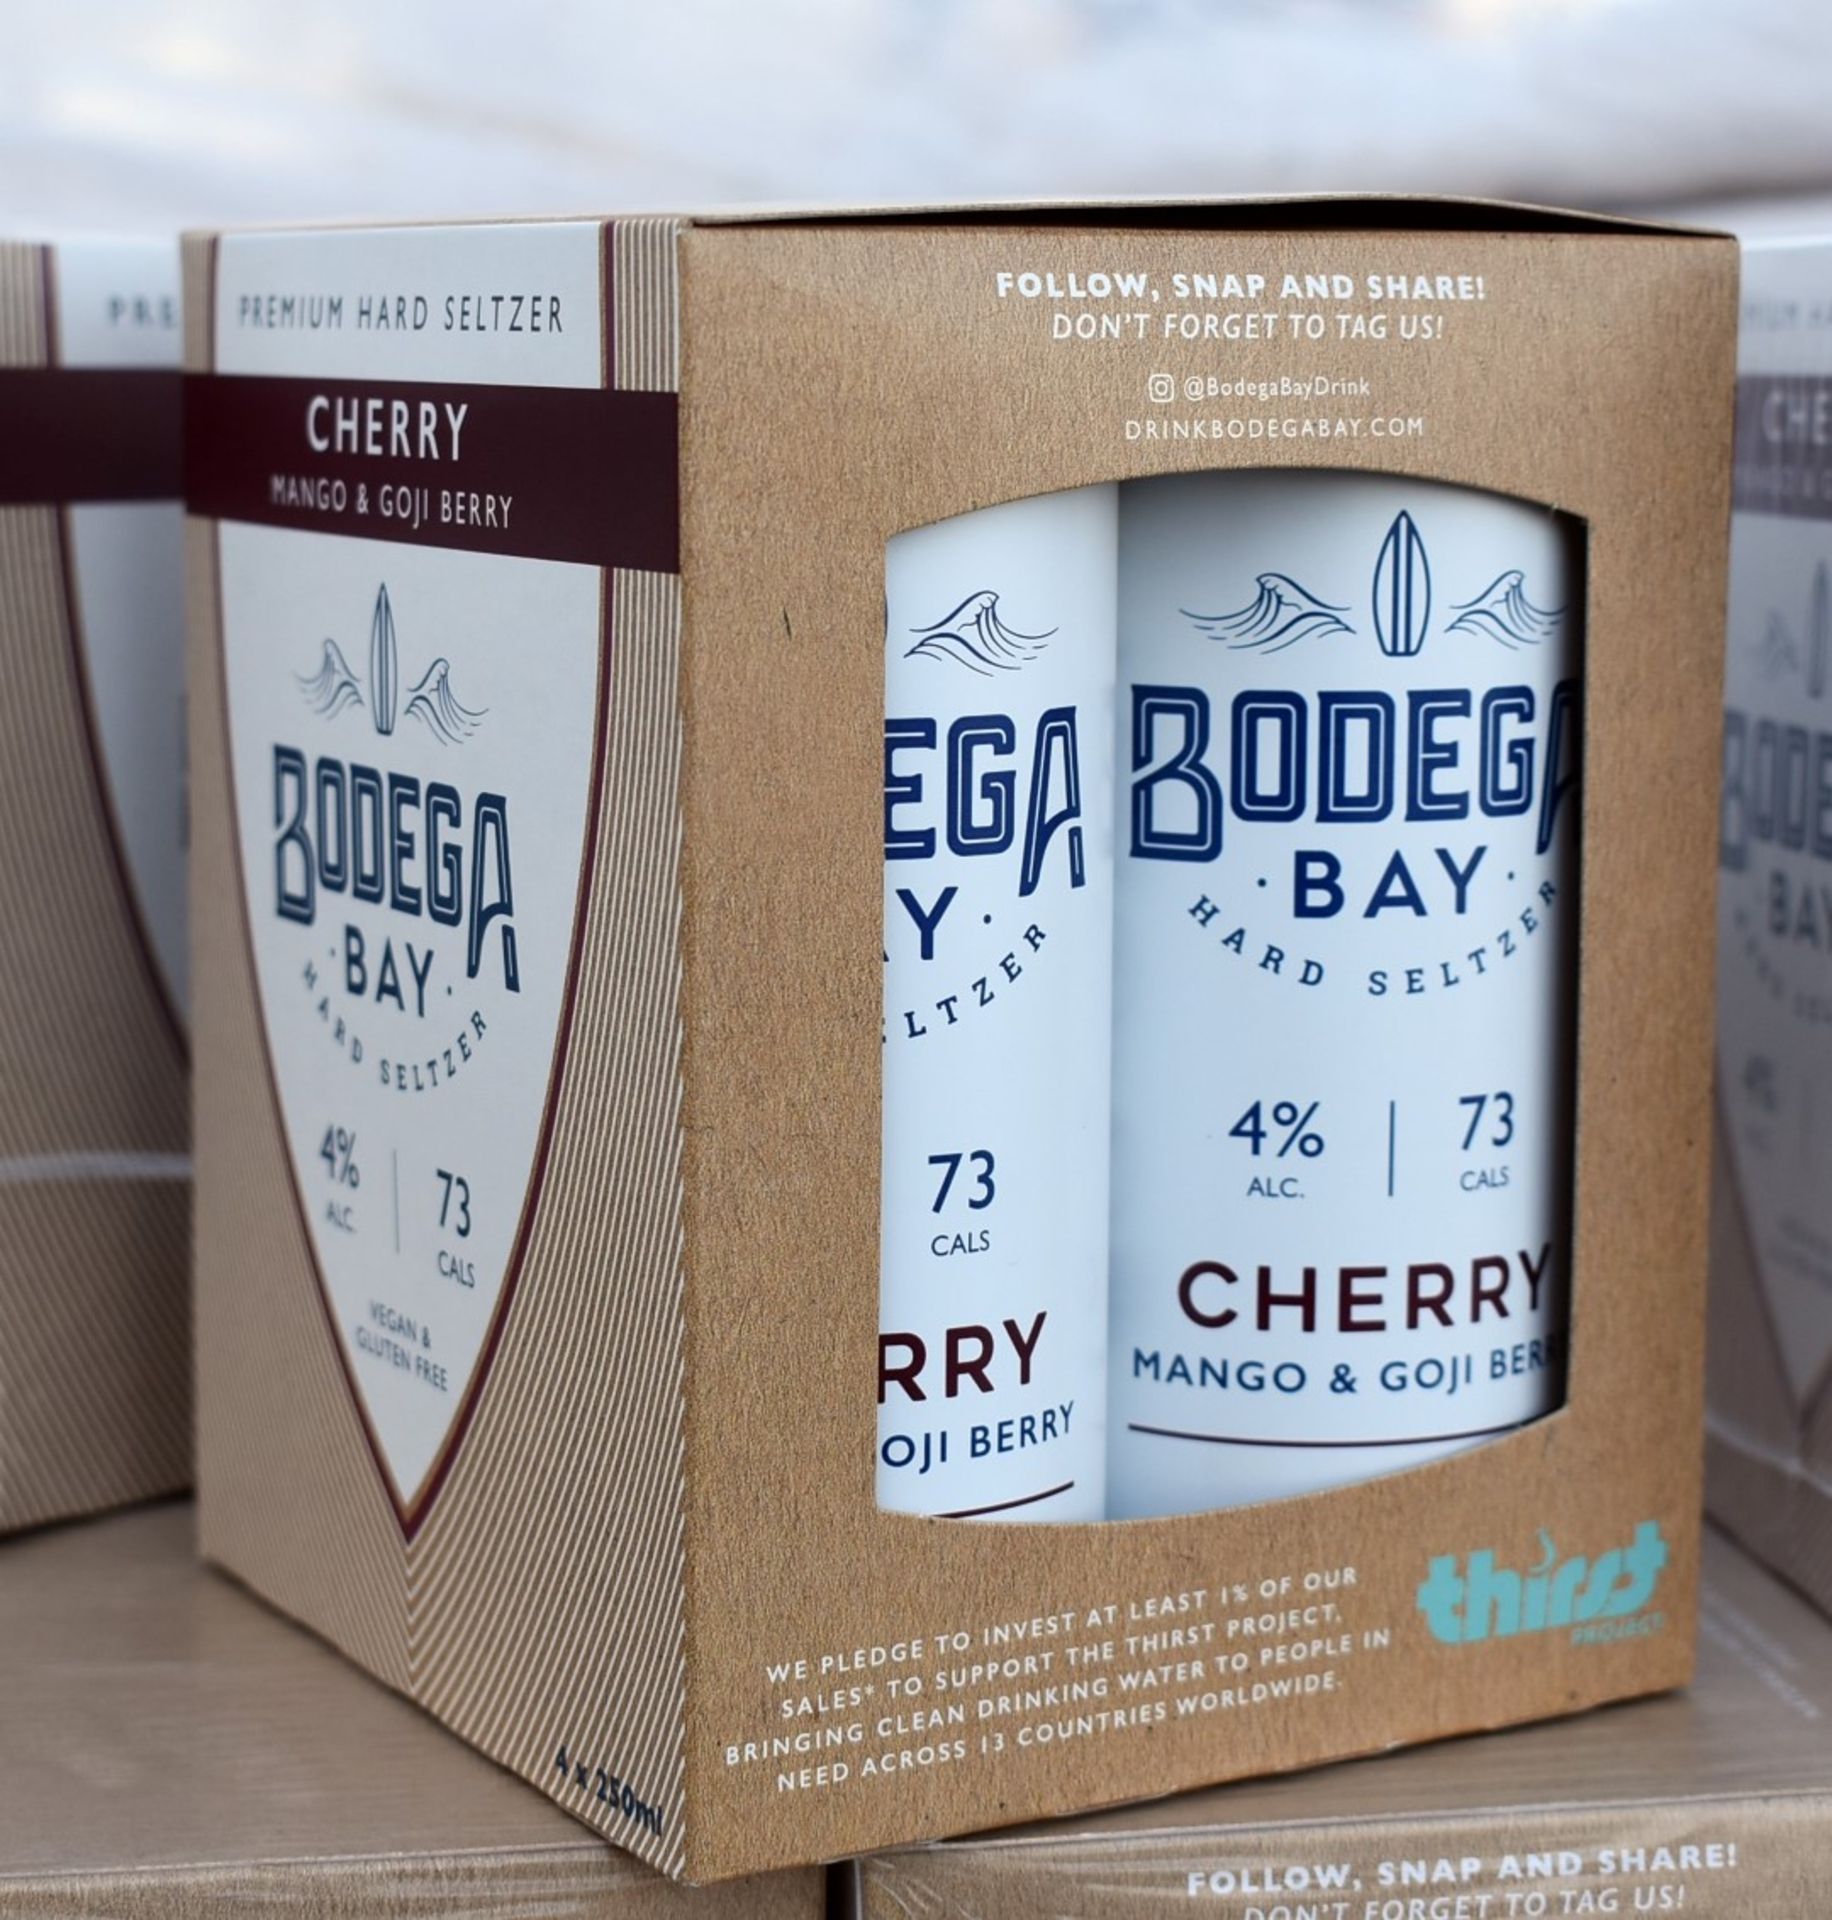 24 x Bodega Bay Hard Seltzer 250ml Alcoholic Sparkling Water Drinks - Cherry Mango & Goji Berry - 4% - Image 6 of 7